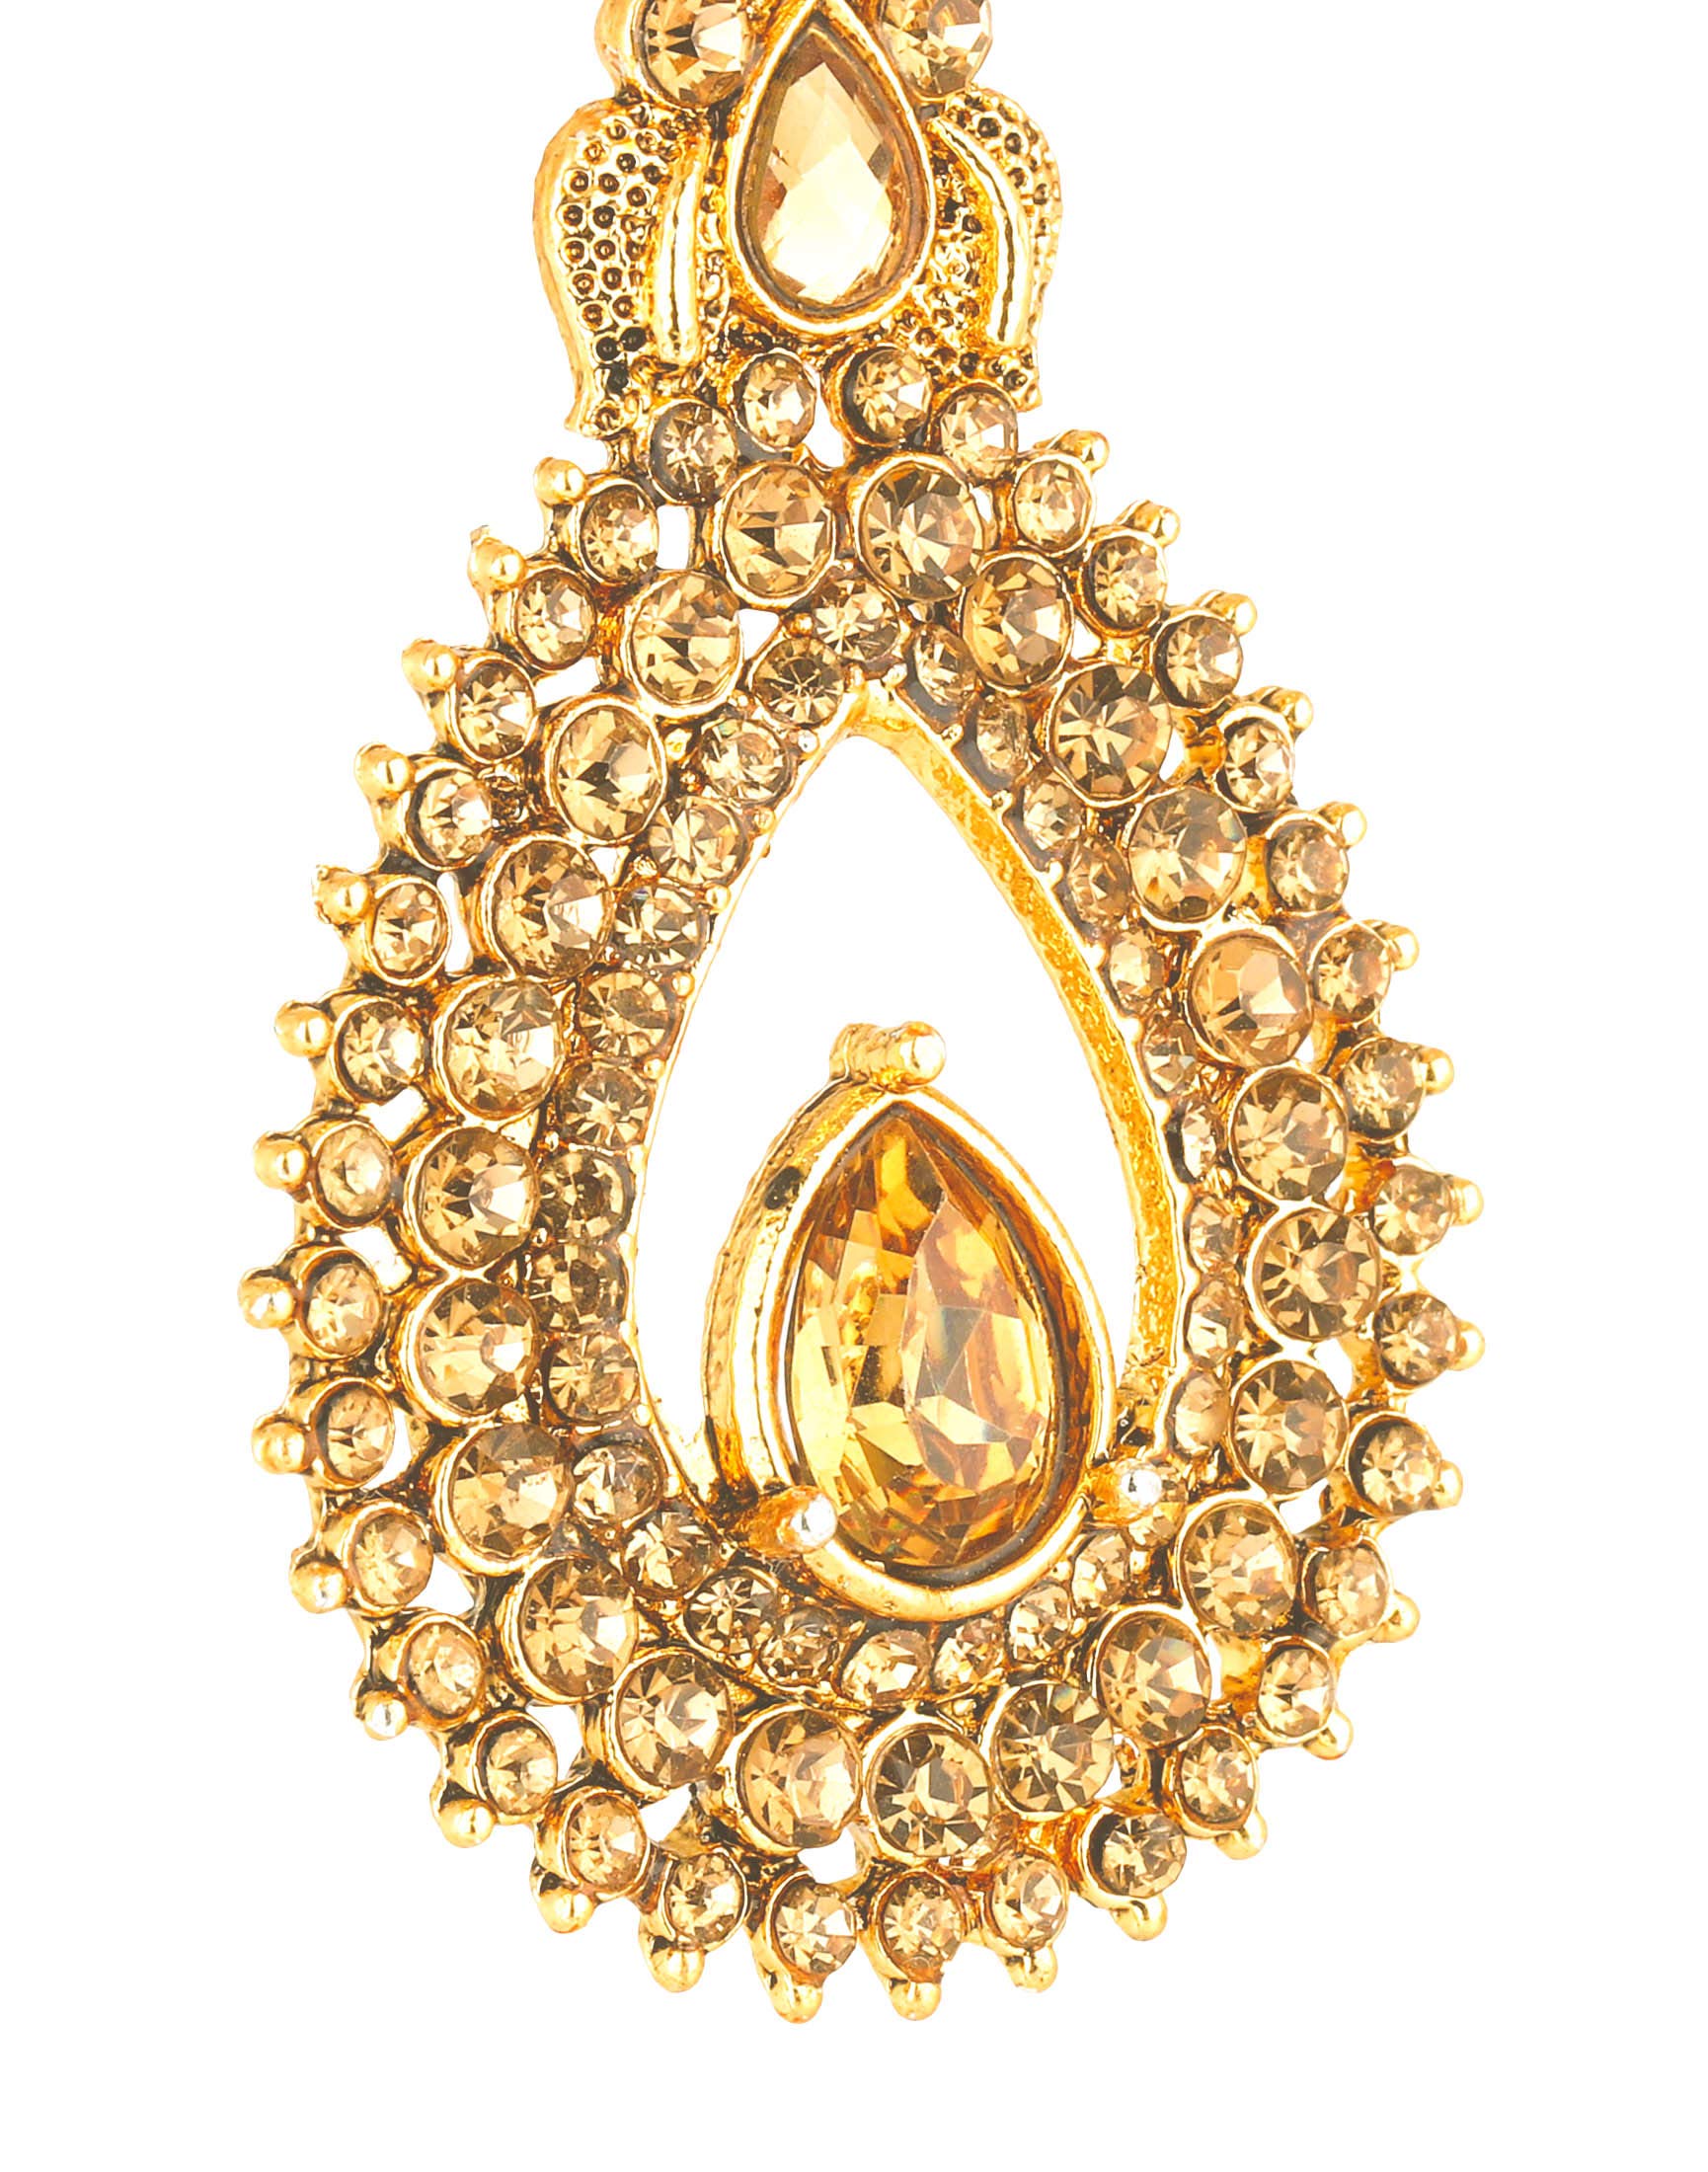 Yellow Chimes Ethnic Gold Plated Traditional Pearl Drops Kundan Jadau Dangler Drop Earrings for Women and Girls